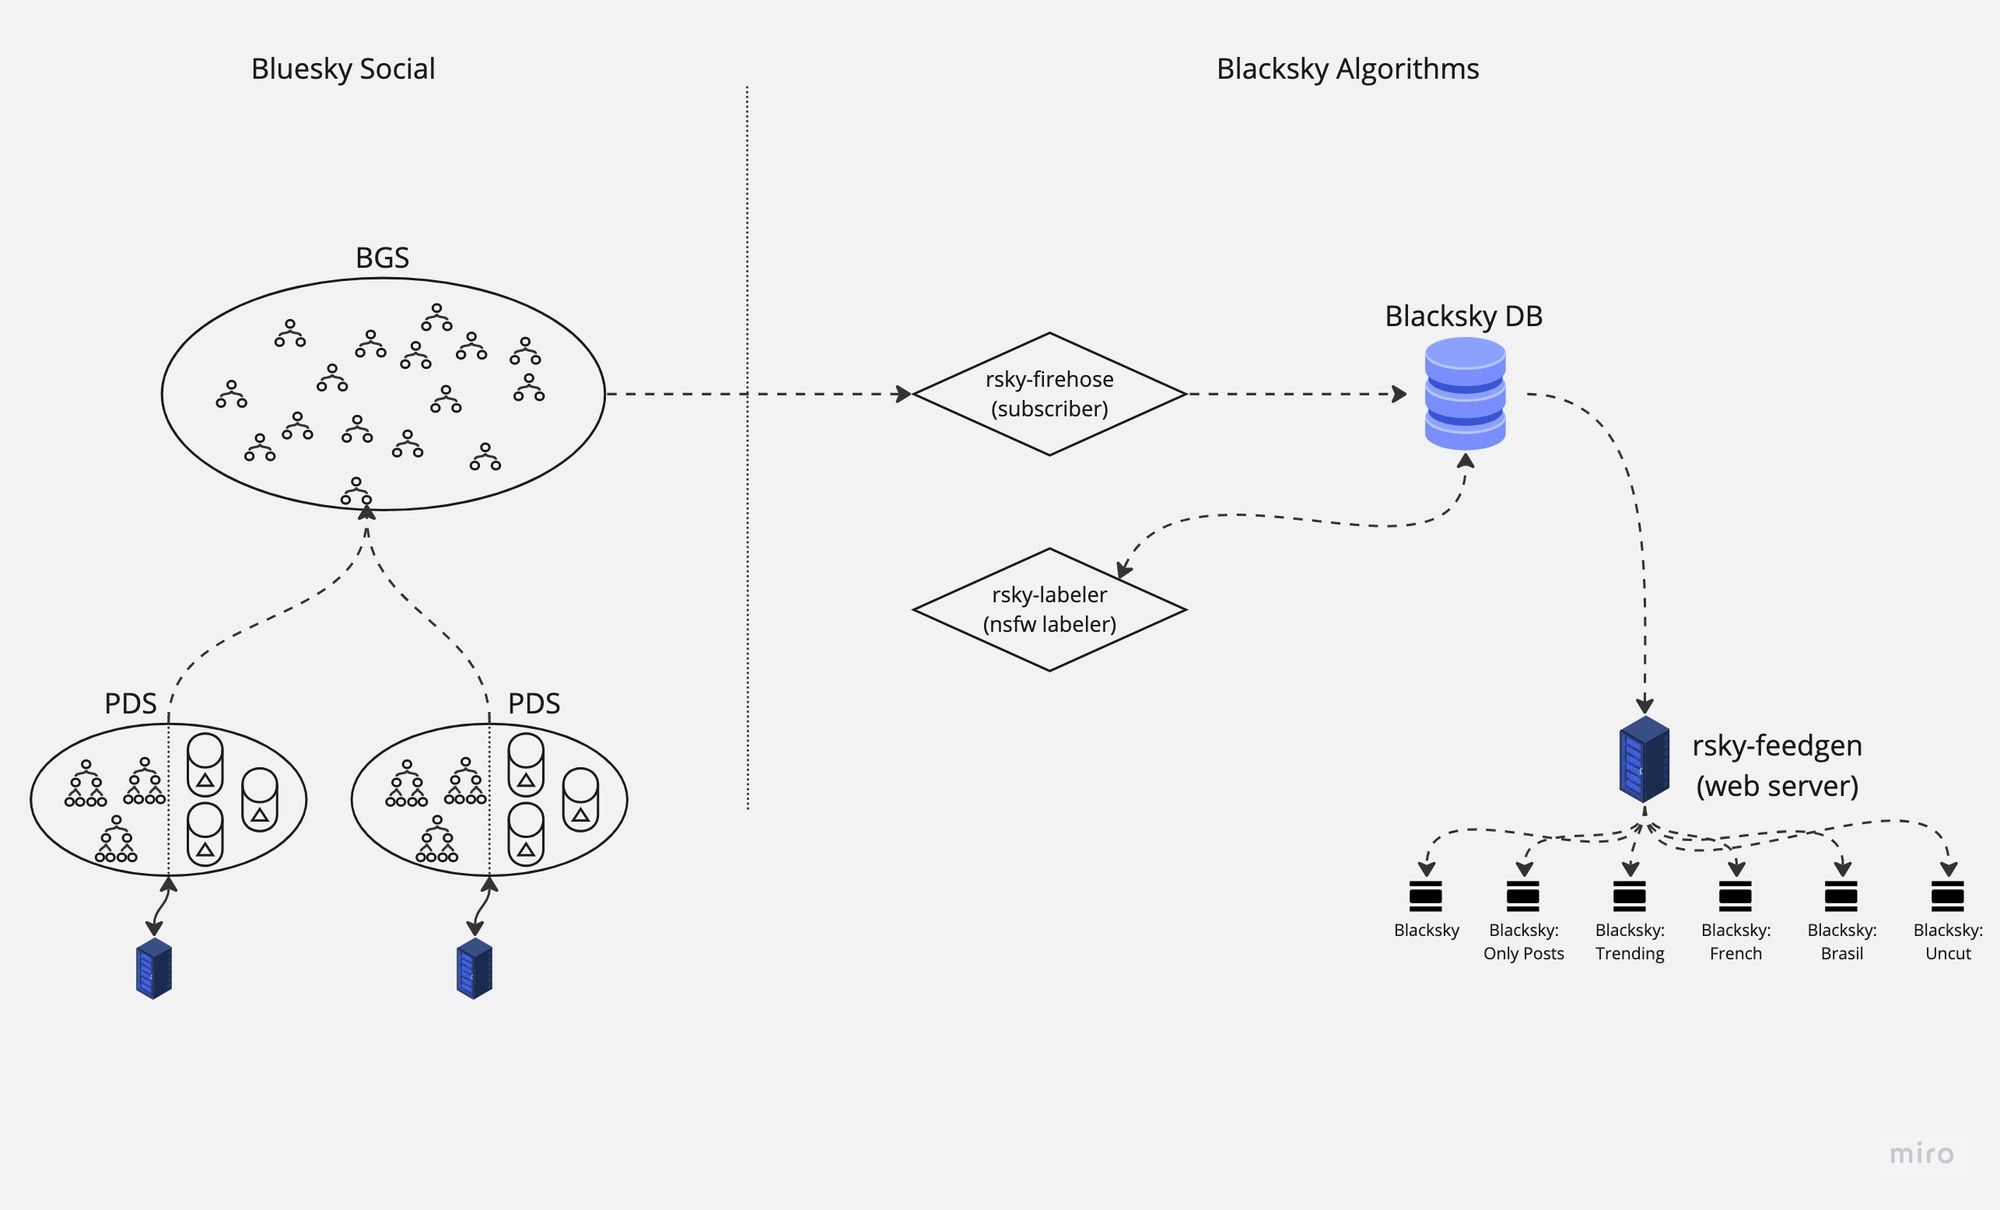 A network diagram of Bluesky Social and Blacksky Algorithms